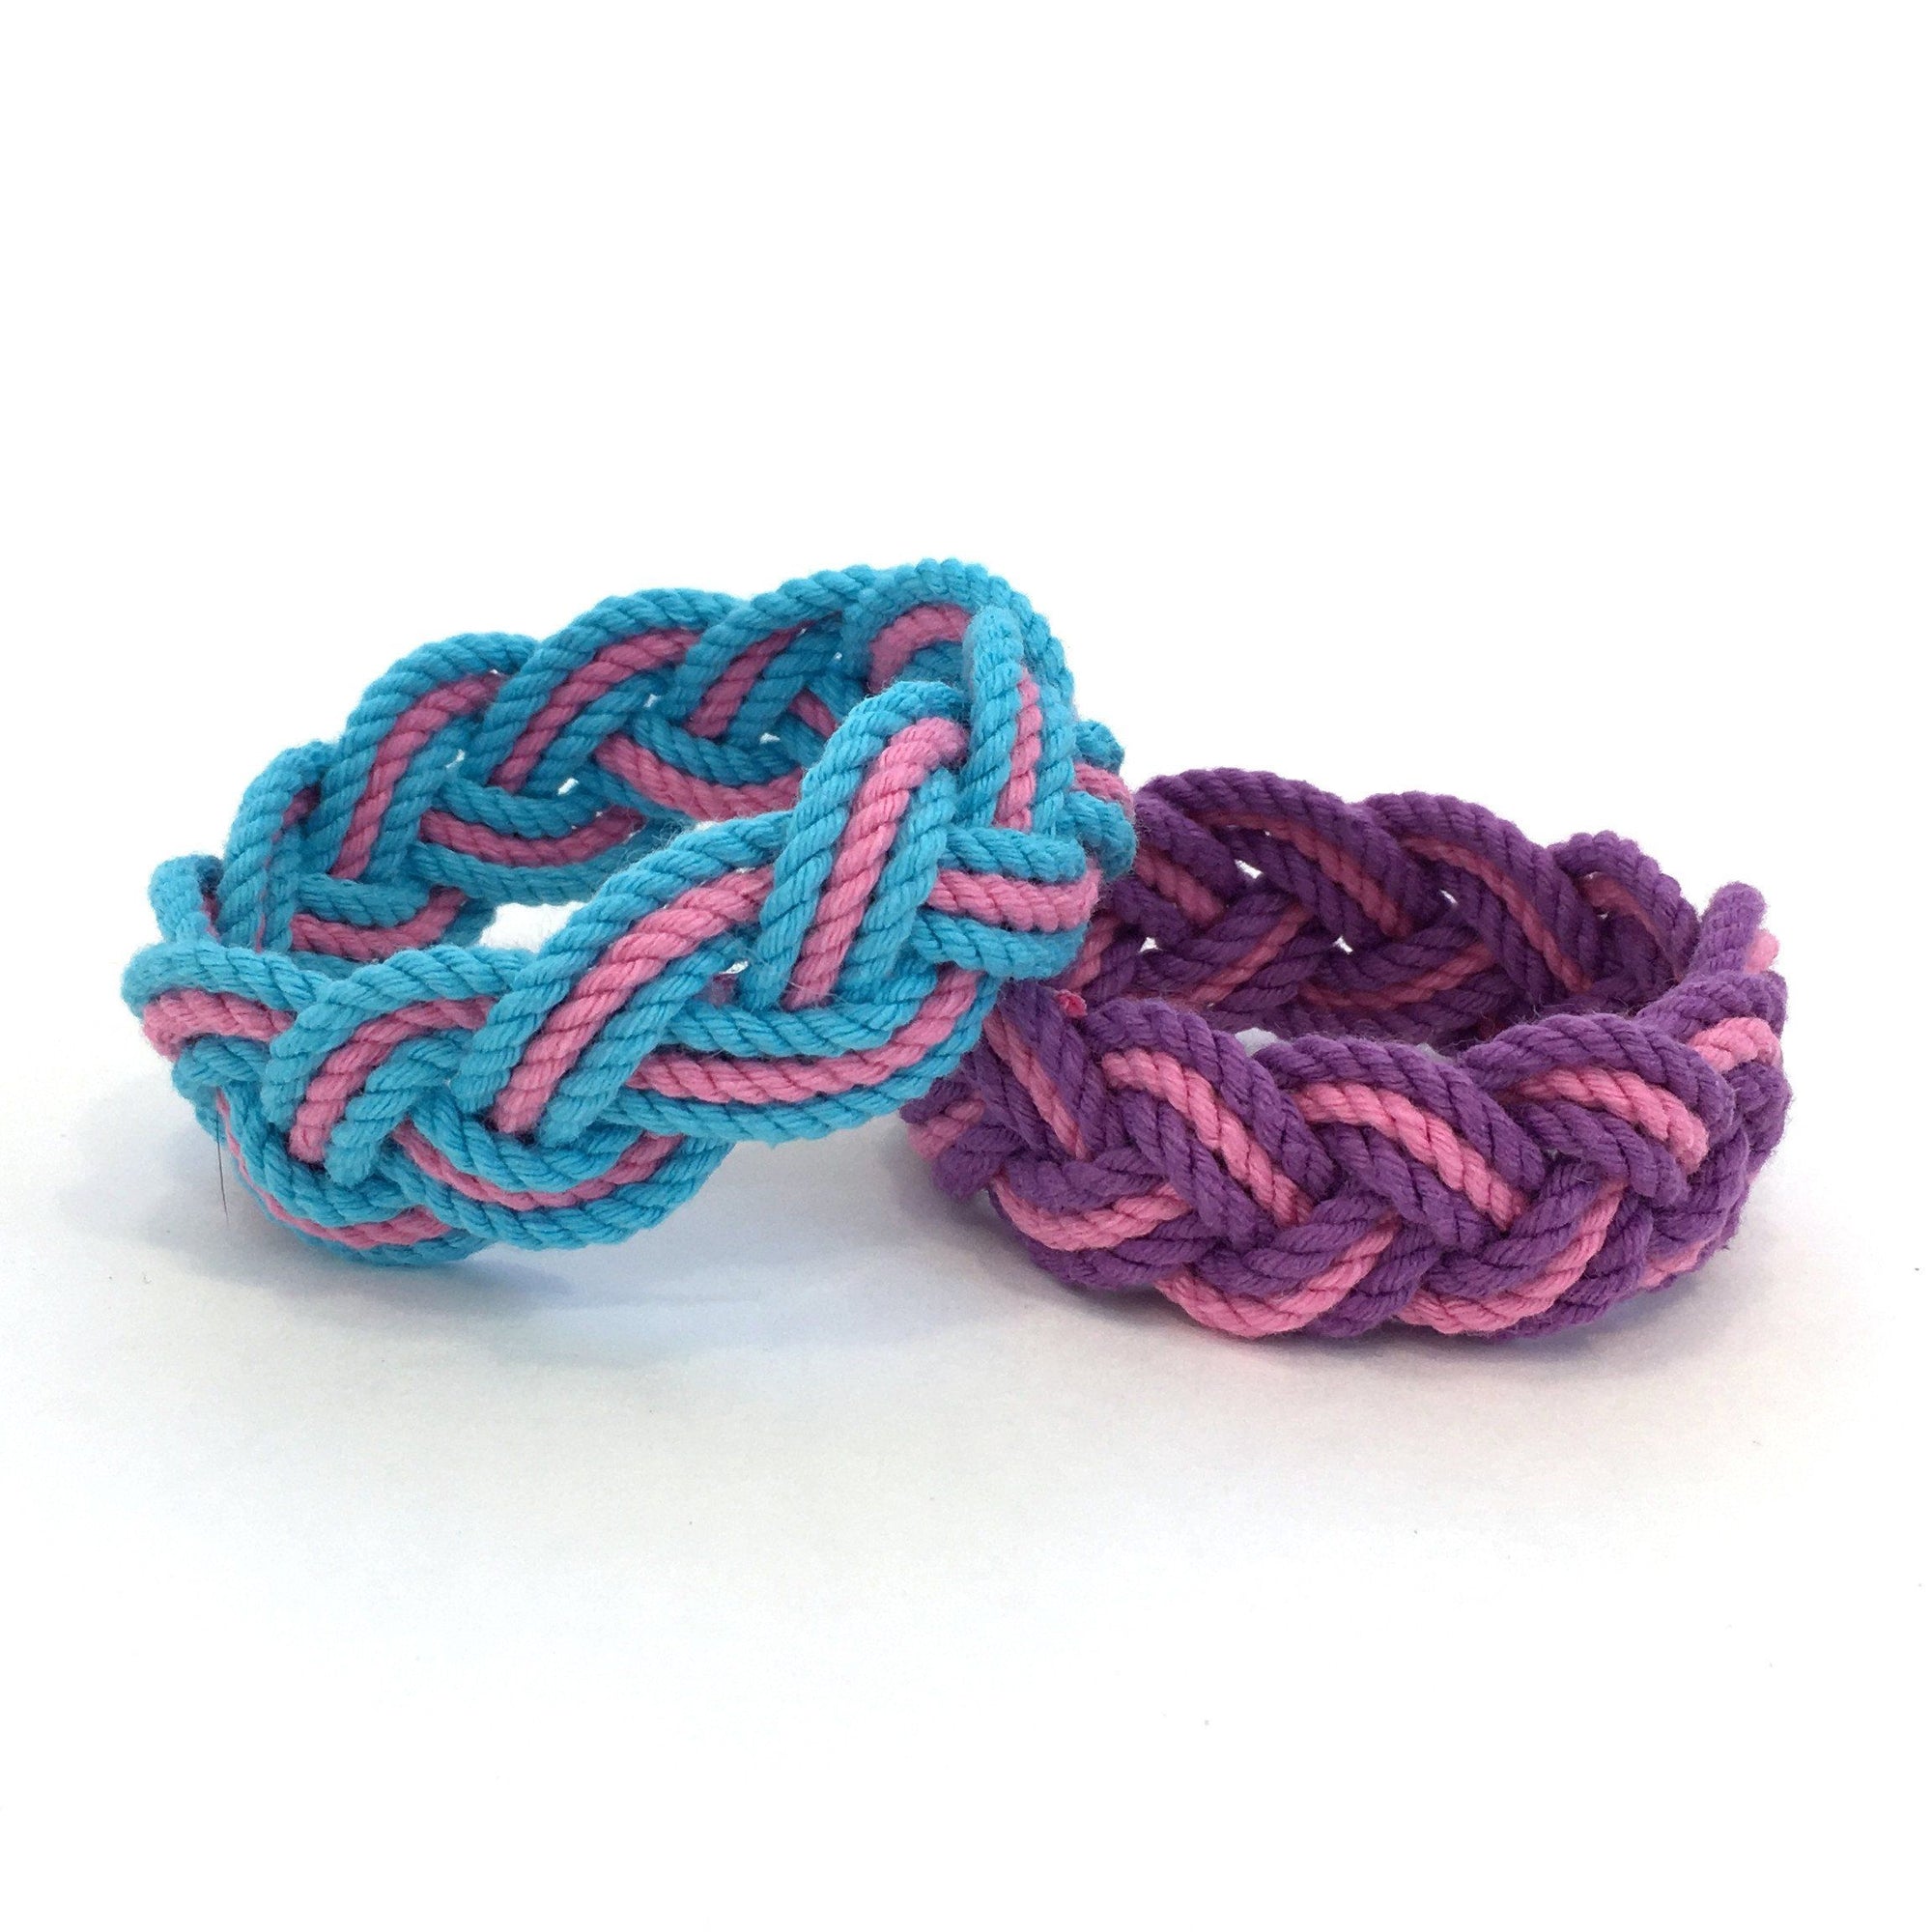 Tarpon Bracelet with Fishing Knot 001-416-00989 - Nautical